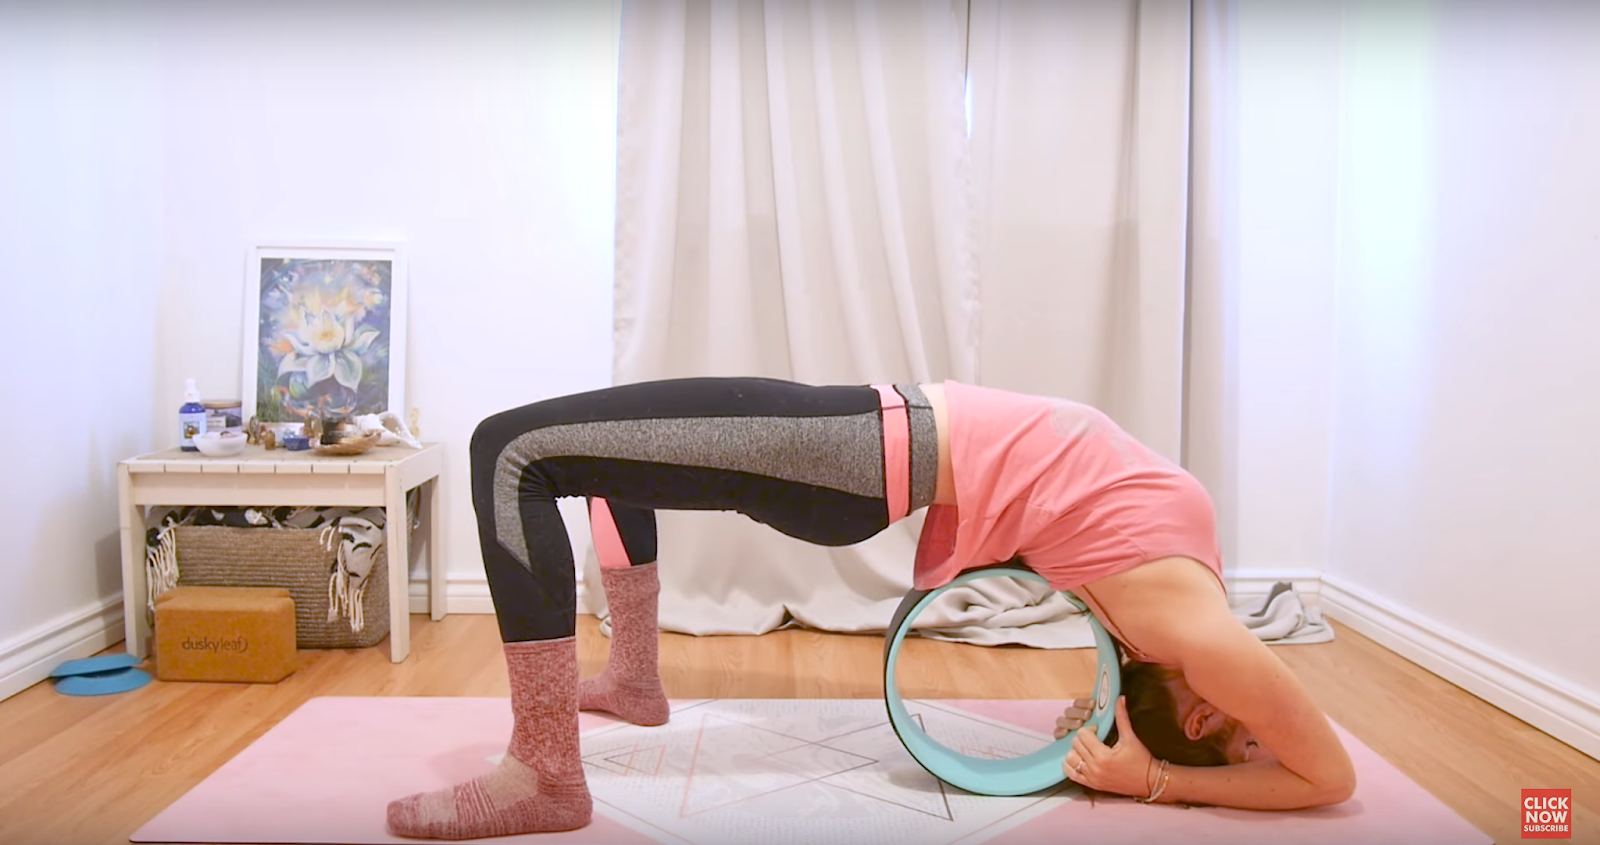 Wheel Pose (Urdhva Dhanurasana) – Queen of Yoga Backbends - TINT Yoga